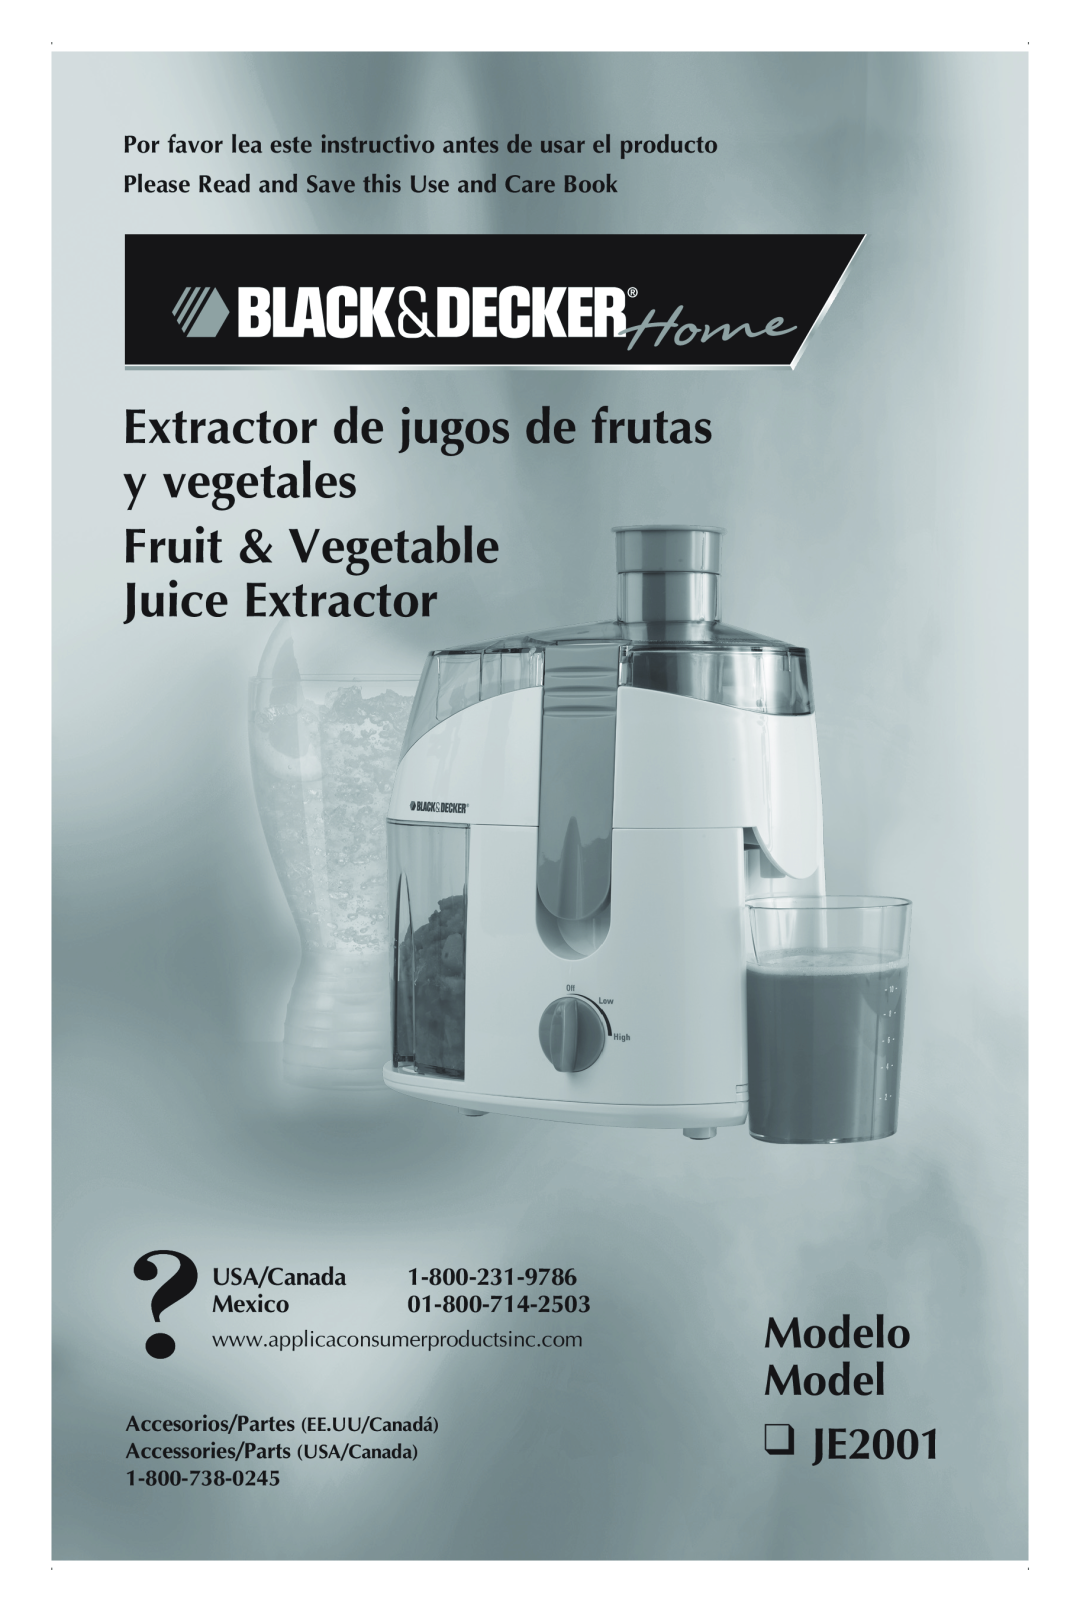 Black & Decker manual Modelo Model JE2001, Extractor de jugos de frutas y vegetales, Fruit & Vegetable Juice Extractor 